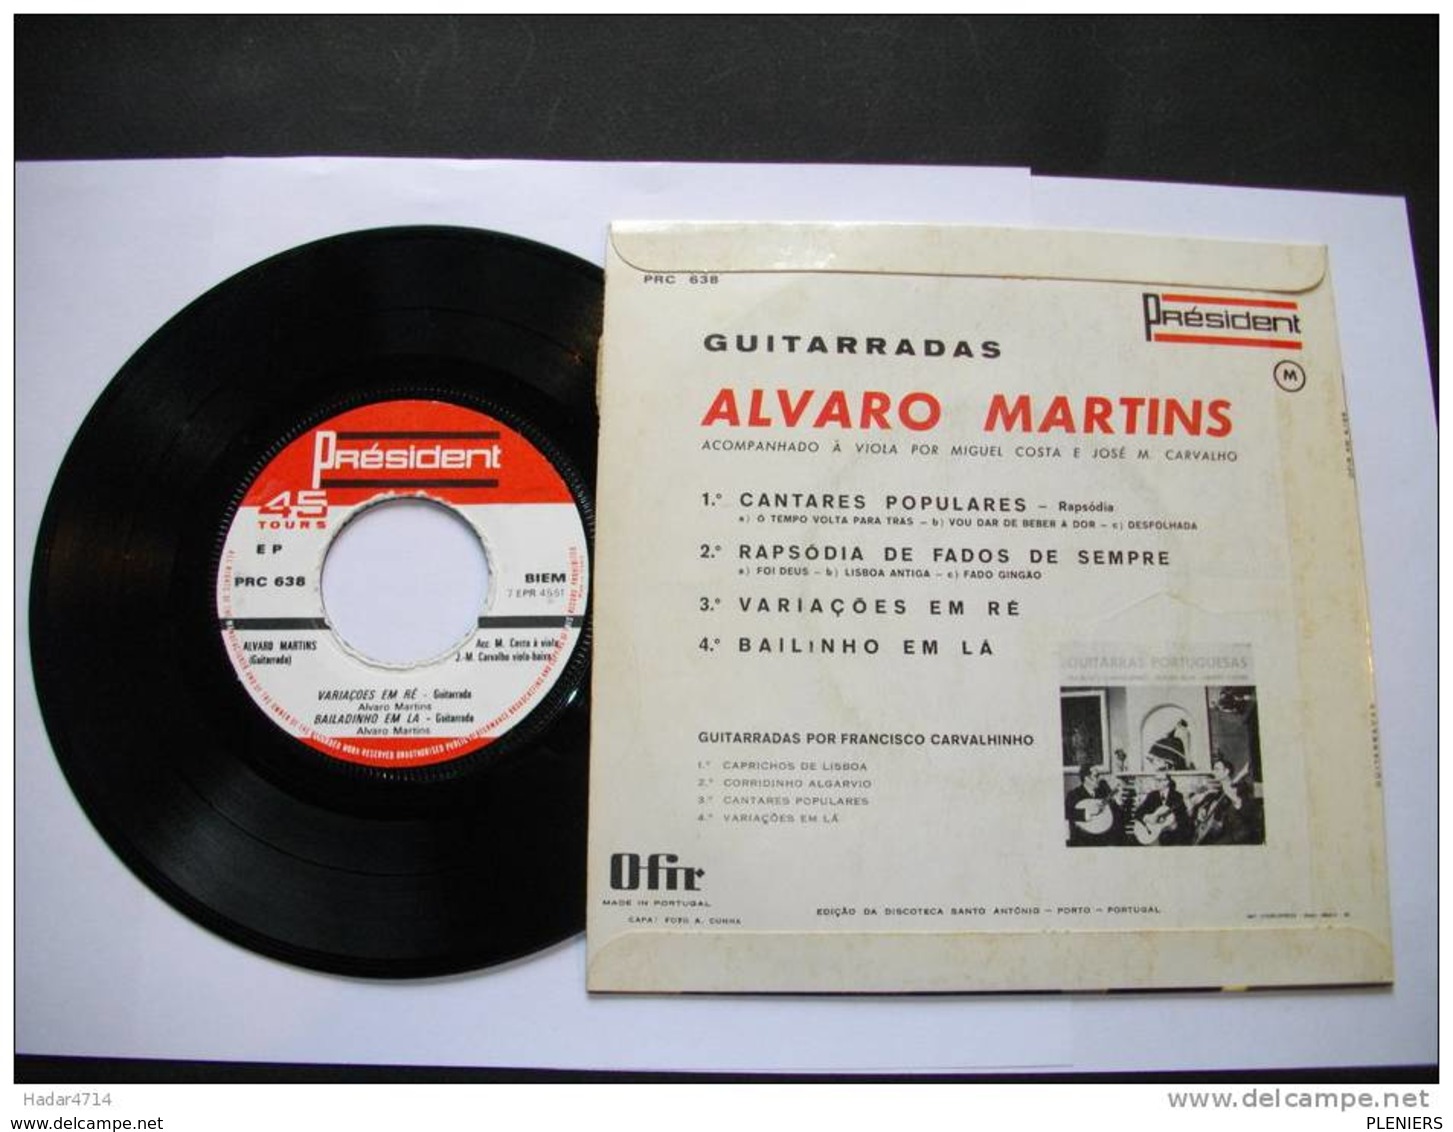 ALVARO MARTINS GUITARRISTE 3GUITARRA PORTUGUESA   PRC 638 PRESIDENT  OFIR MADE IN PORTUGAL - Musicals